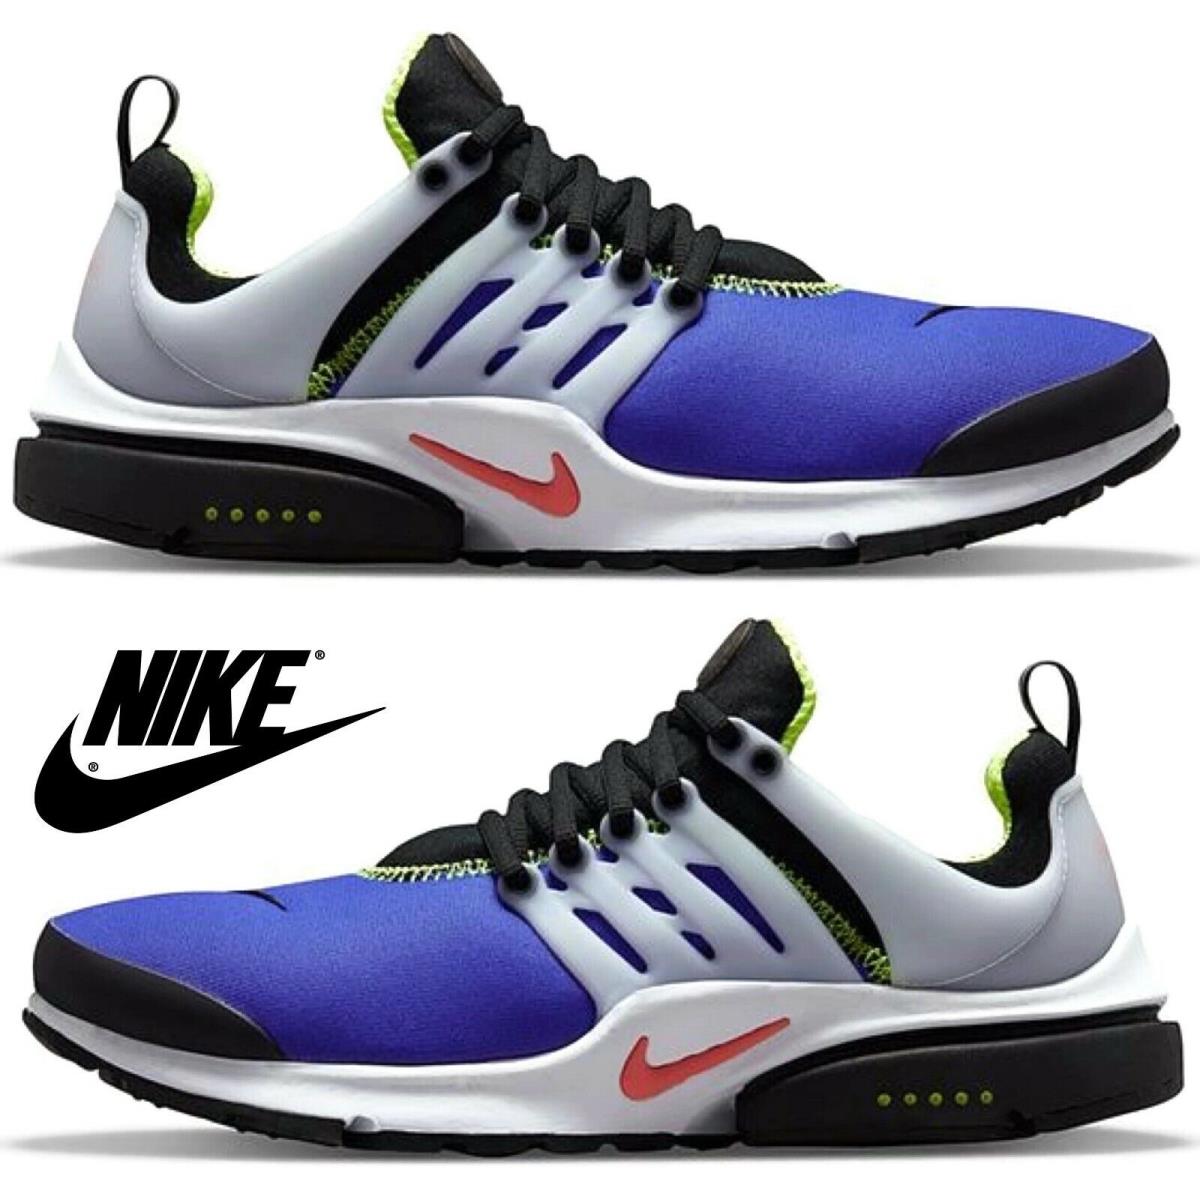 Nike Air Presto Running Sneakers Men`s Athletic Comfort Casual Shoes Blue Gray - Blue , Persian Violet/Bright Crimson/White/Volt/Black Manufacturer